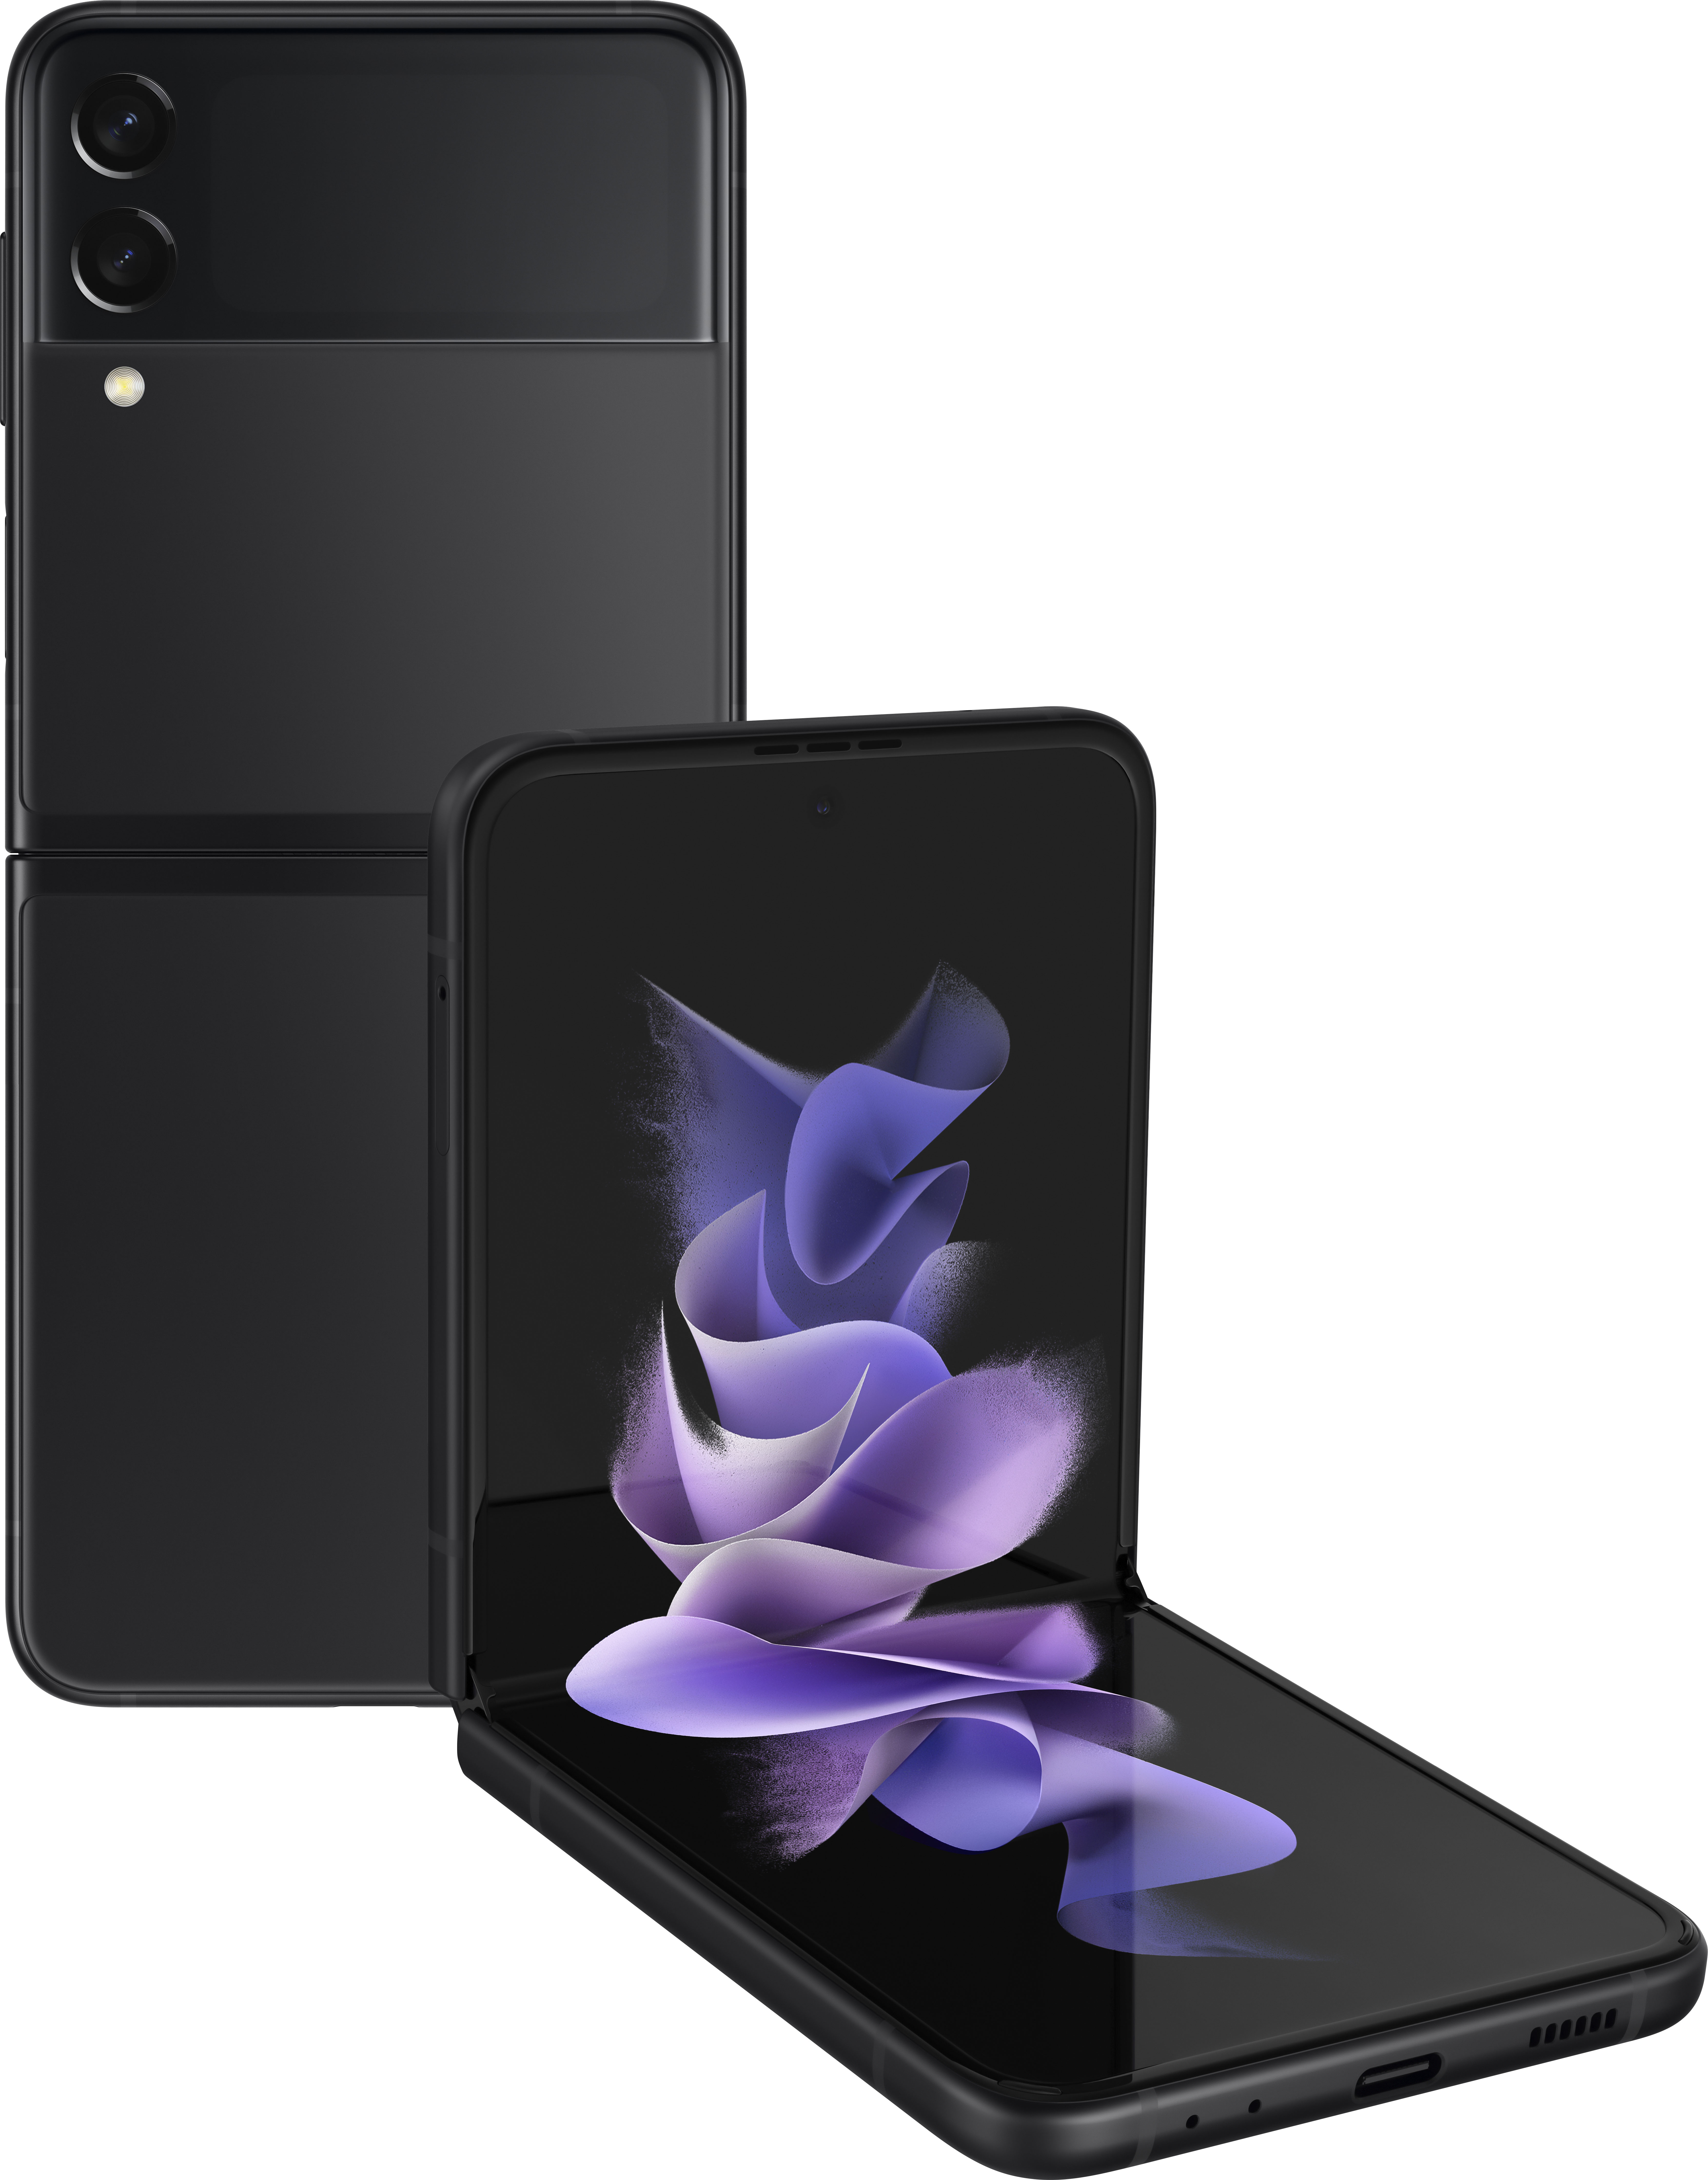 AT&T Samsung Galaxy Z Fold 5 Phantom Black 256GB 